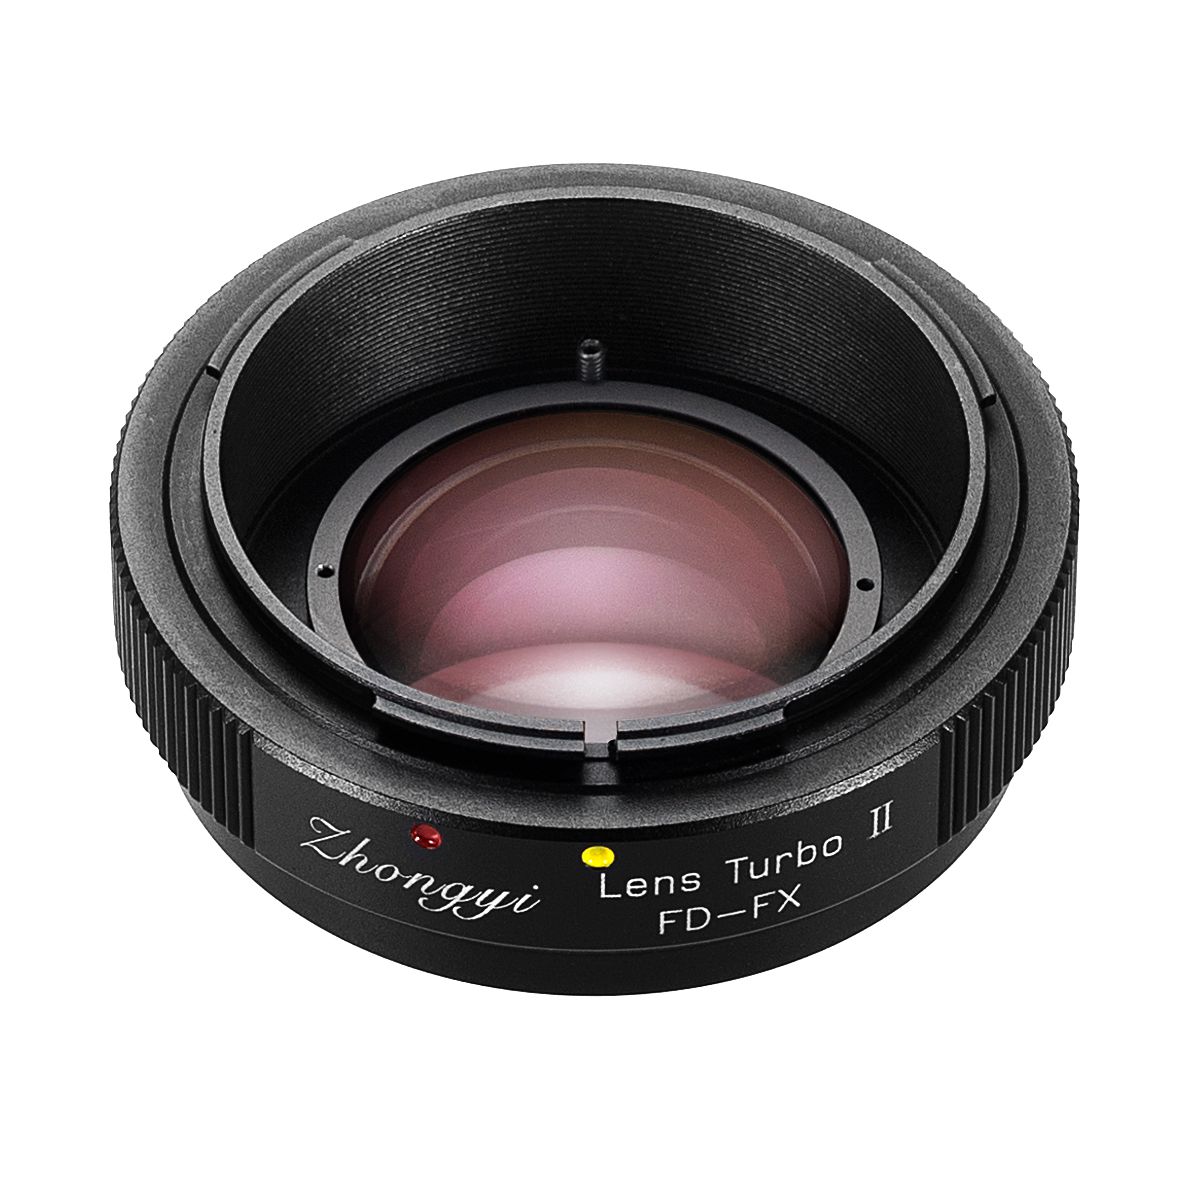 中一光学- Lens Turbo II FD-FX